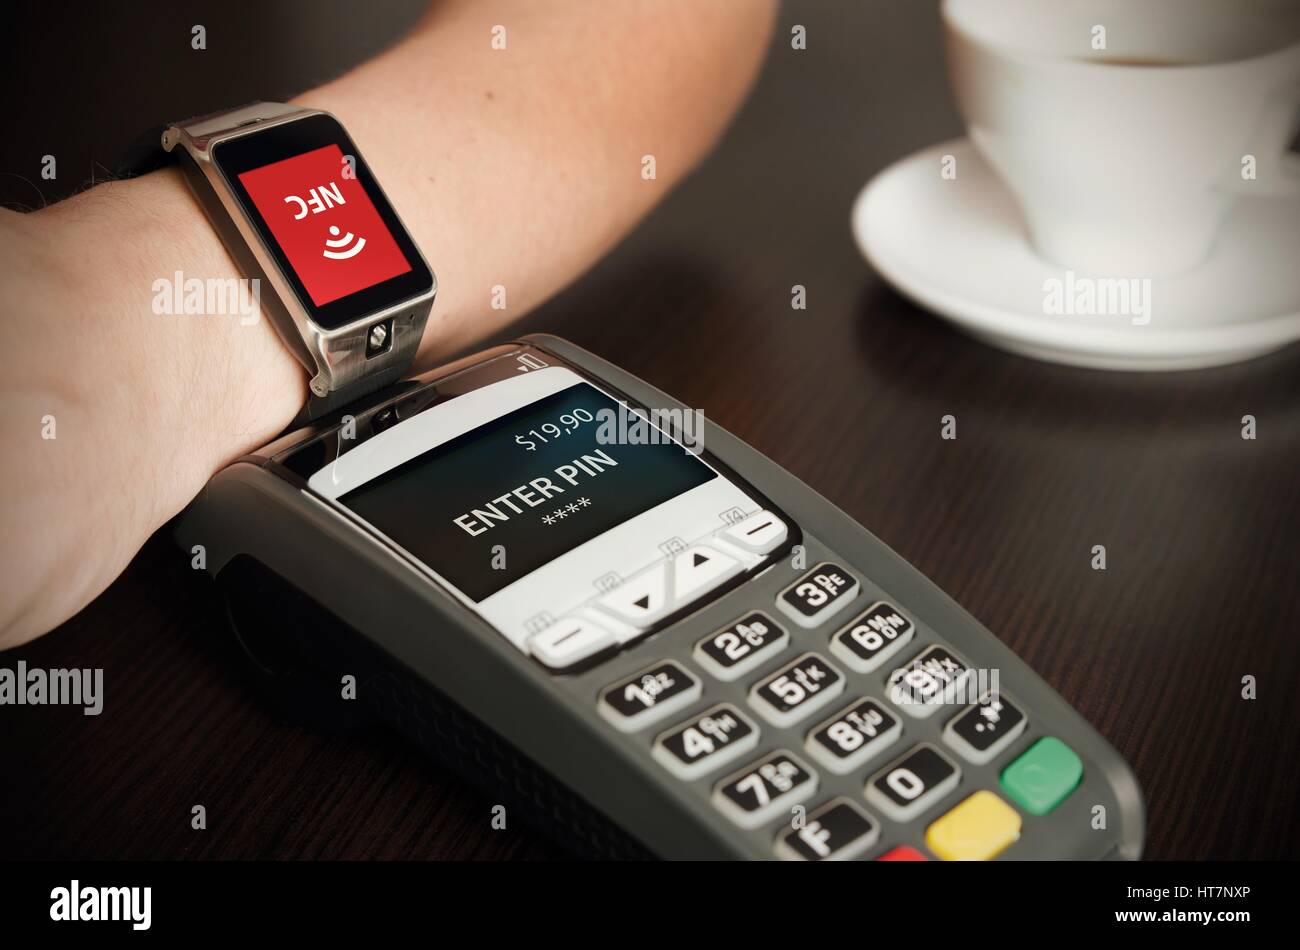 Man making payment through smartwatch via NFC contactless technology Stock Photo